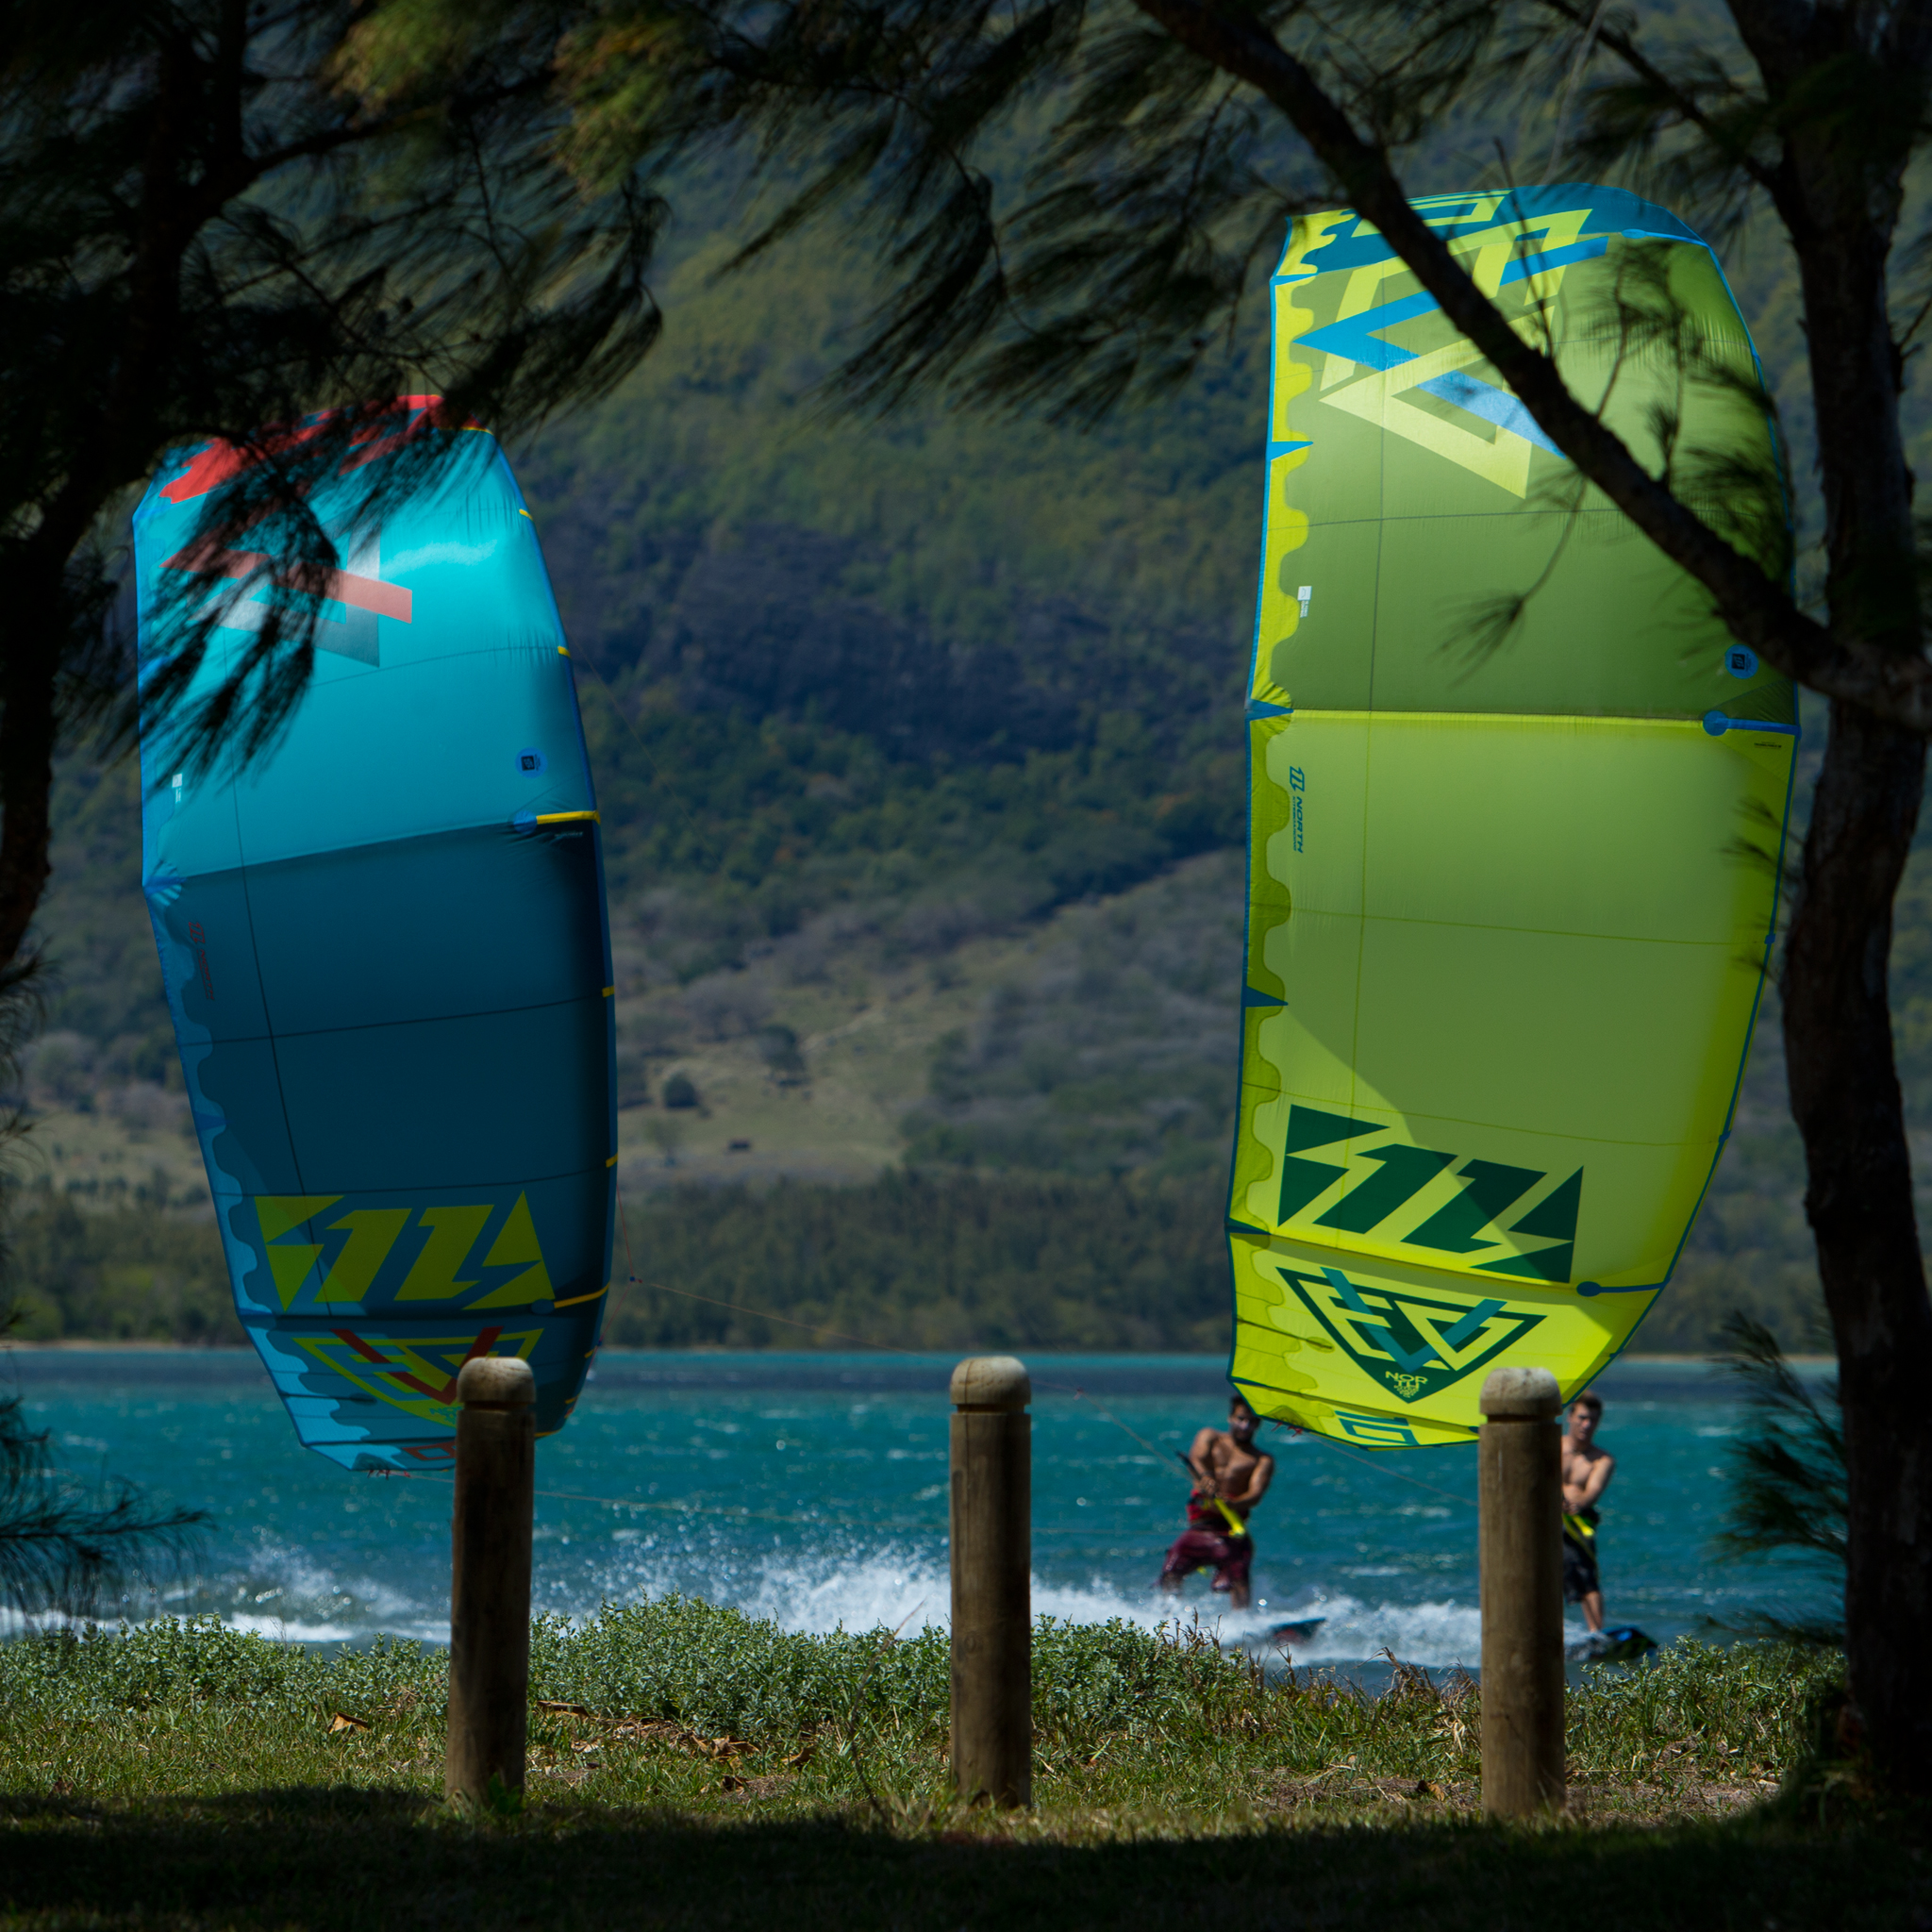 kitesurf wallpaper image - North Evo 2015 duo cruising between the trees - kitesurfing - in resolution: iPad 2 & 3 2048 X 2048